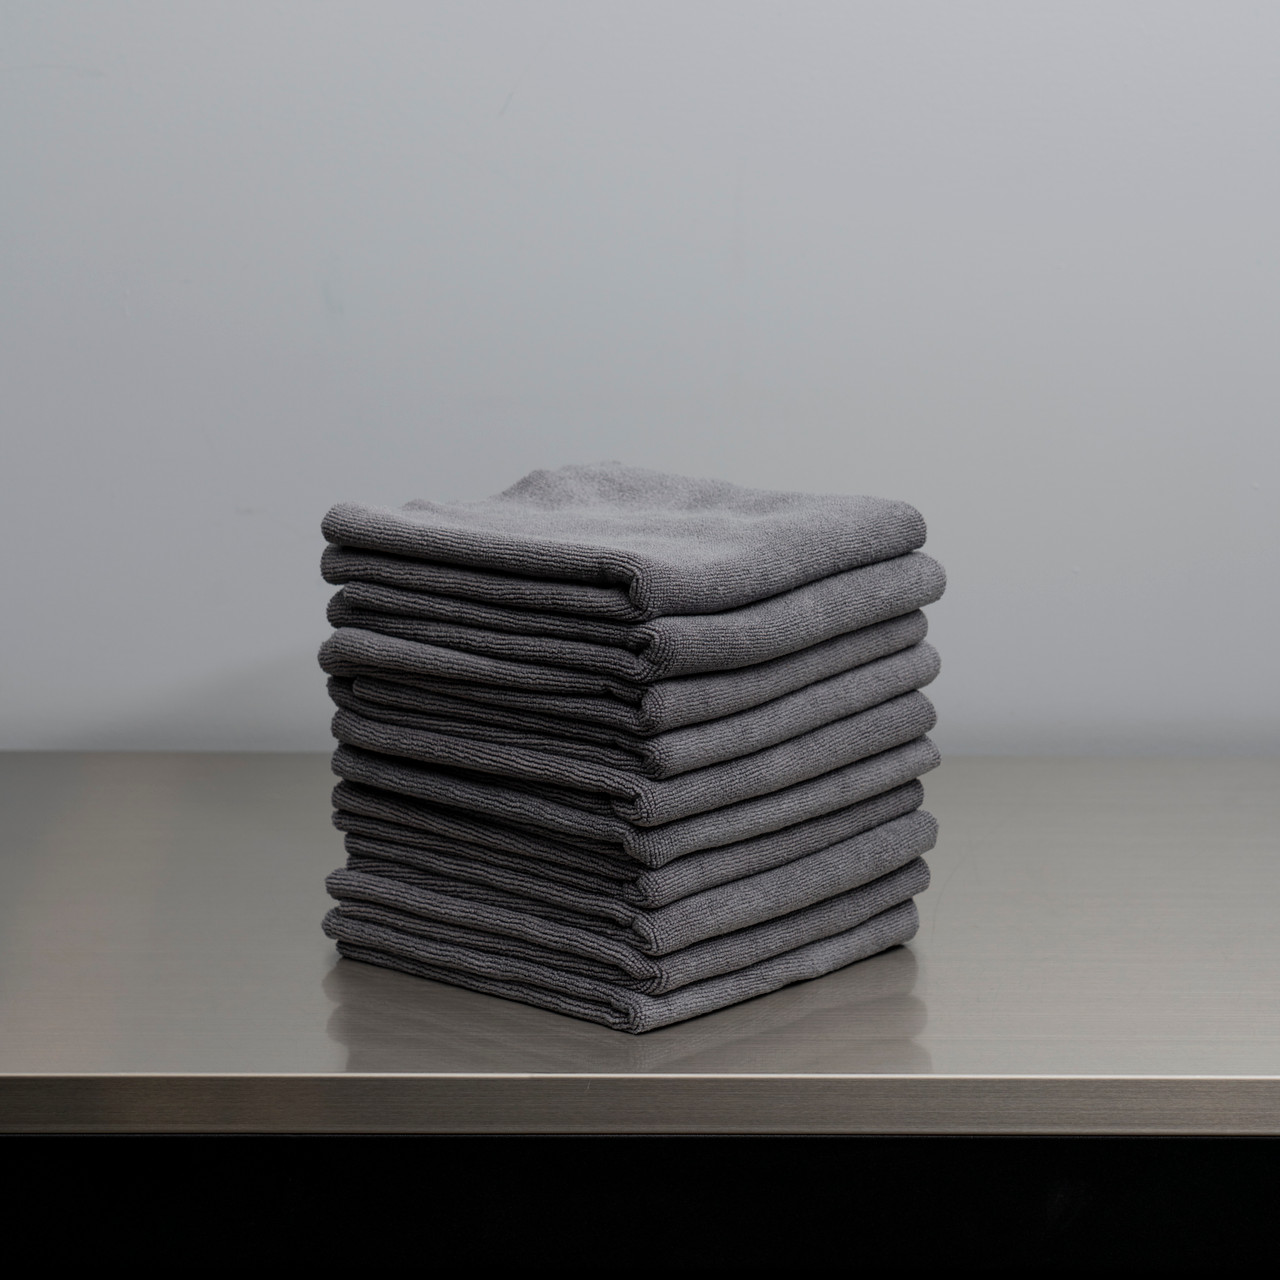 Thick Edgeless Microfiber Towel, Gray